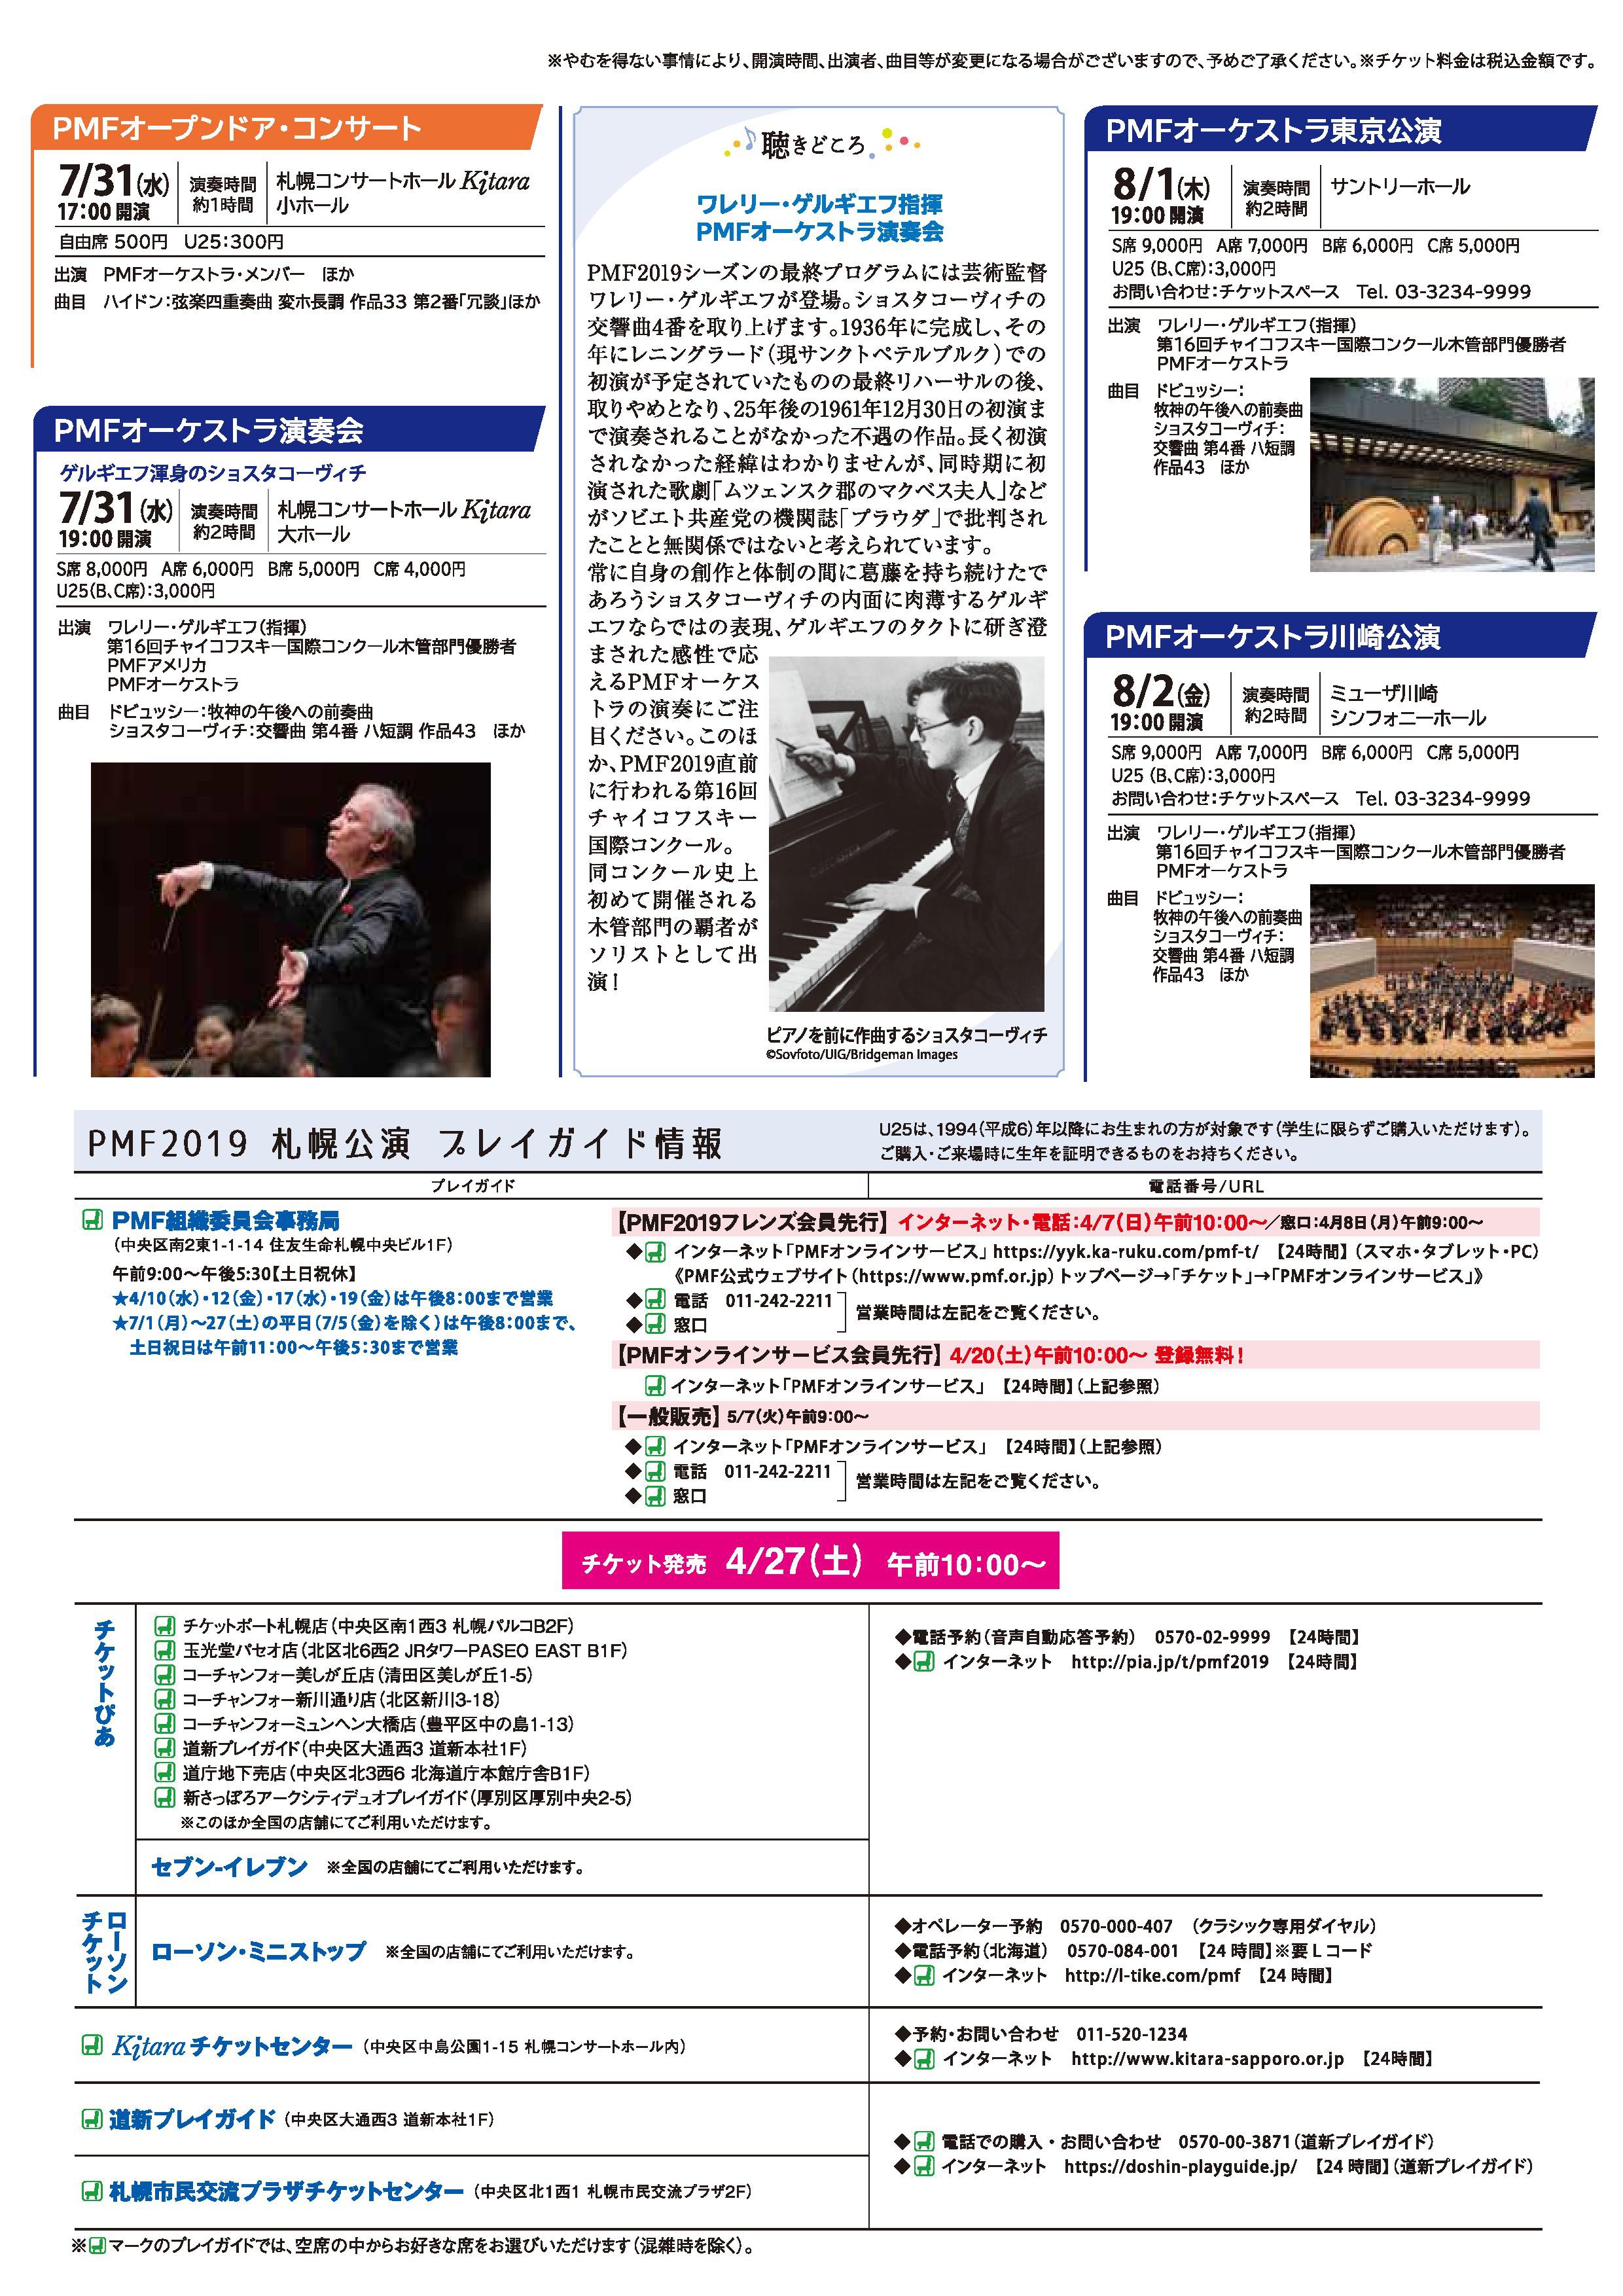 PMF 2019 Concert Schedule *Japanese (4)